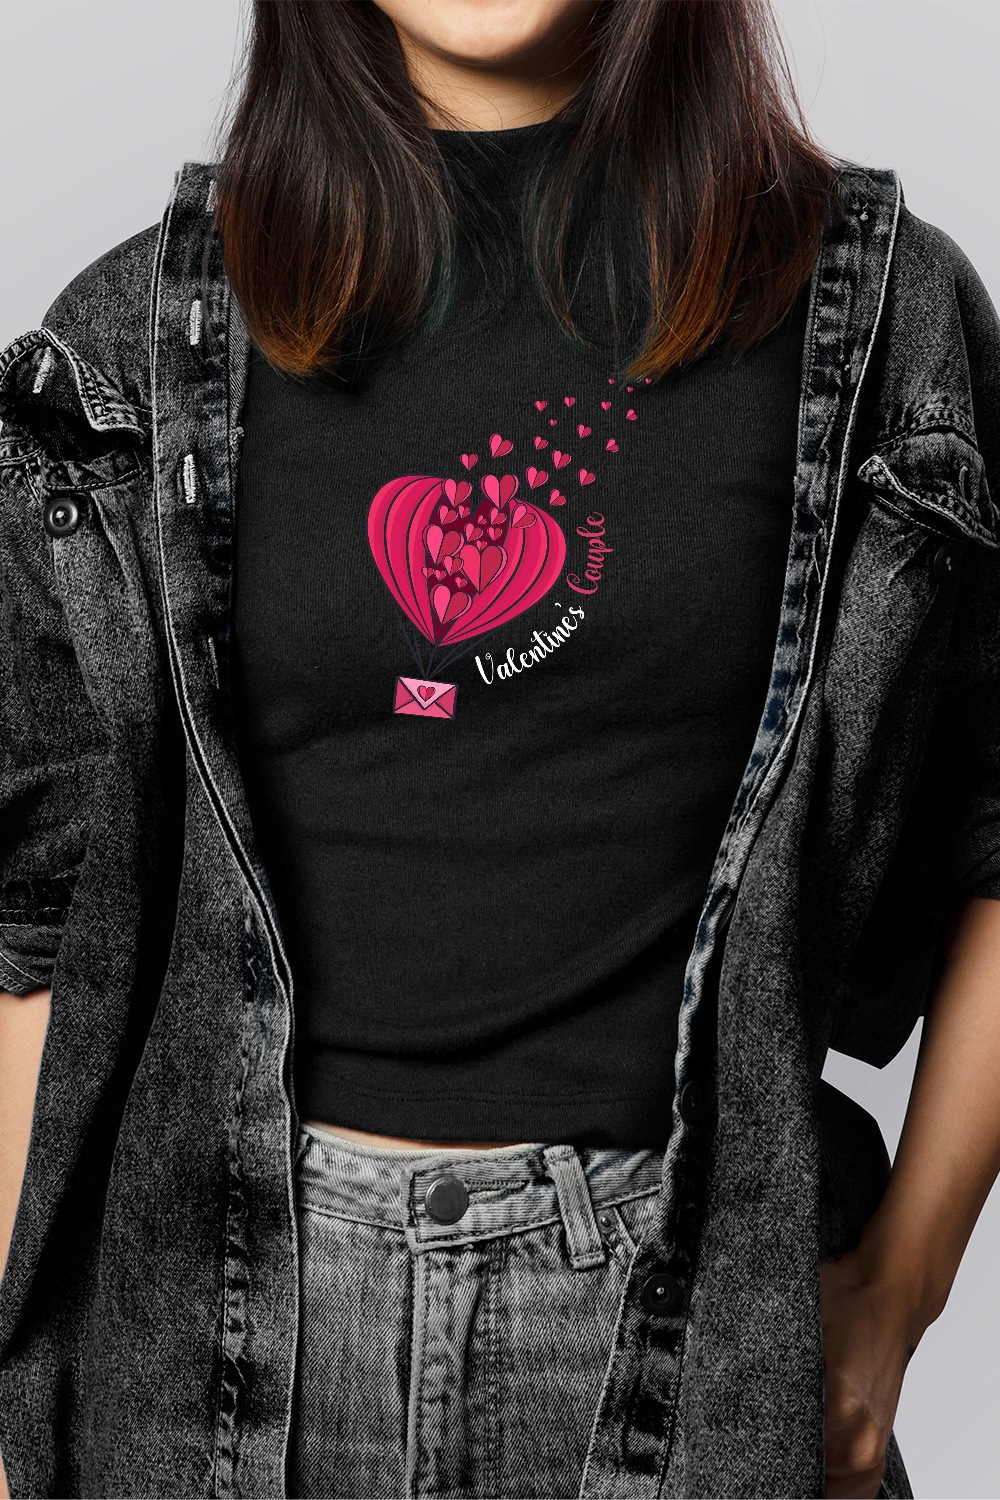 Valentine\'s Couple T-shirt pinterest preview image.